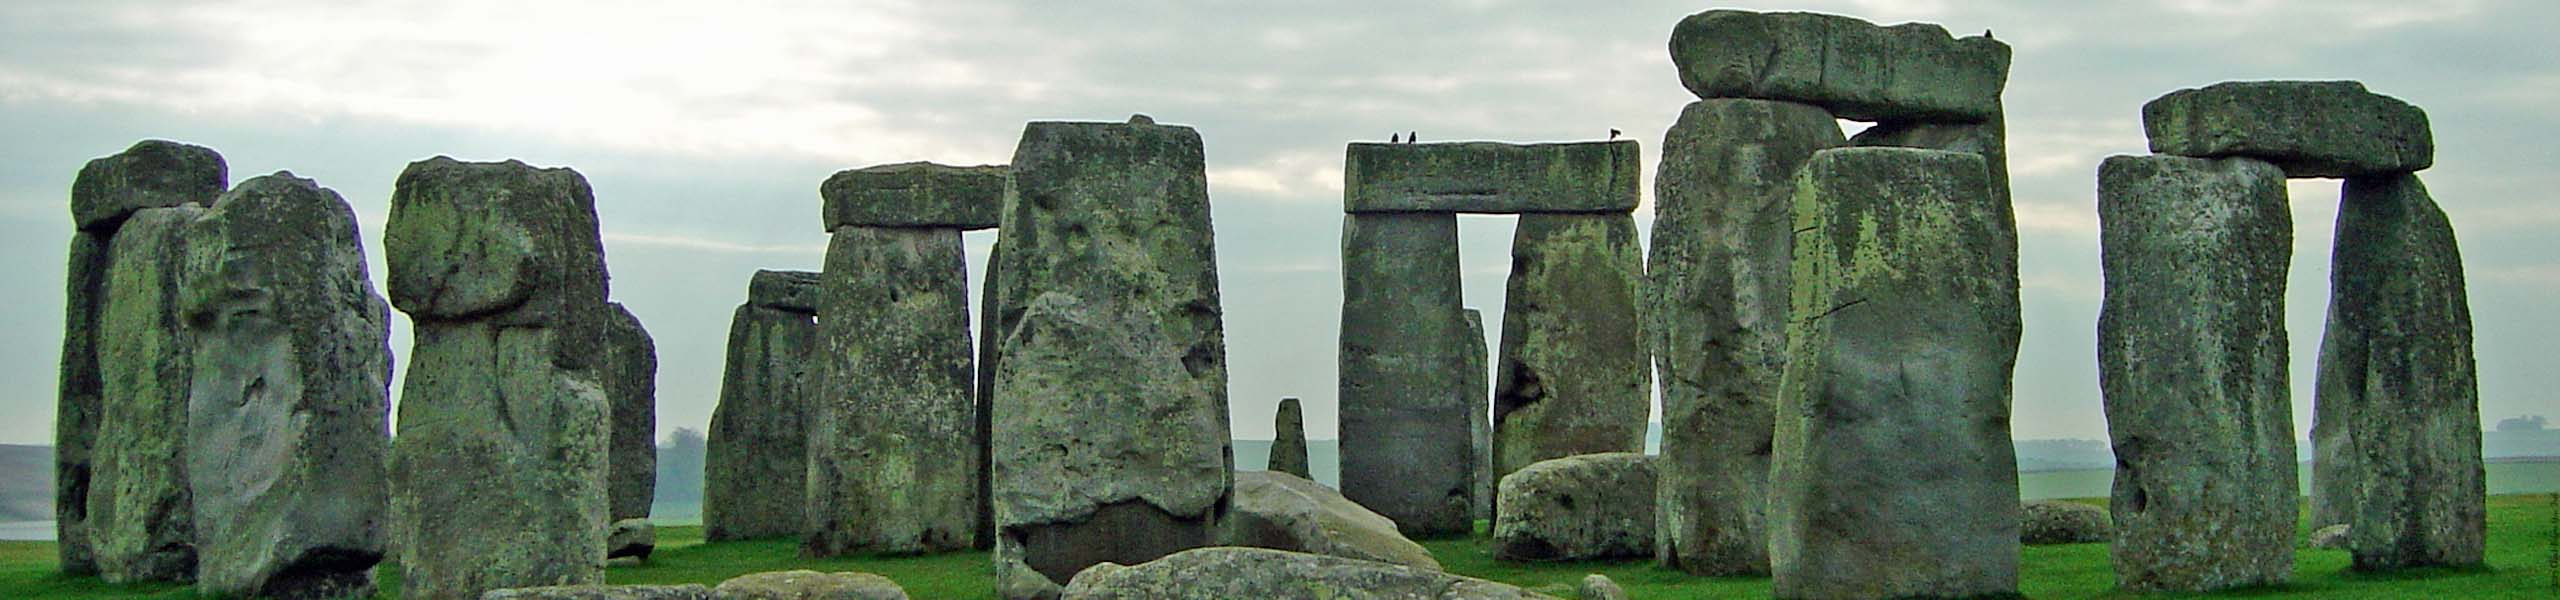 Article's Featured Photo: Stonehenge, England